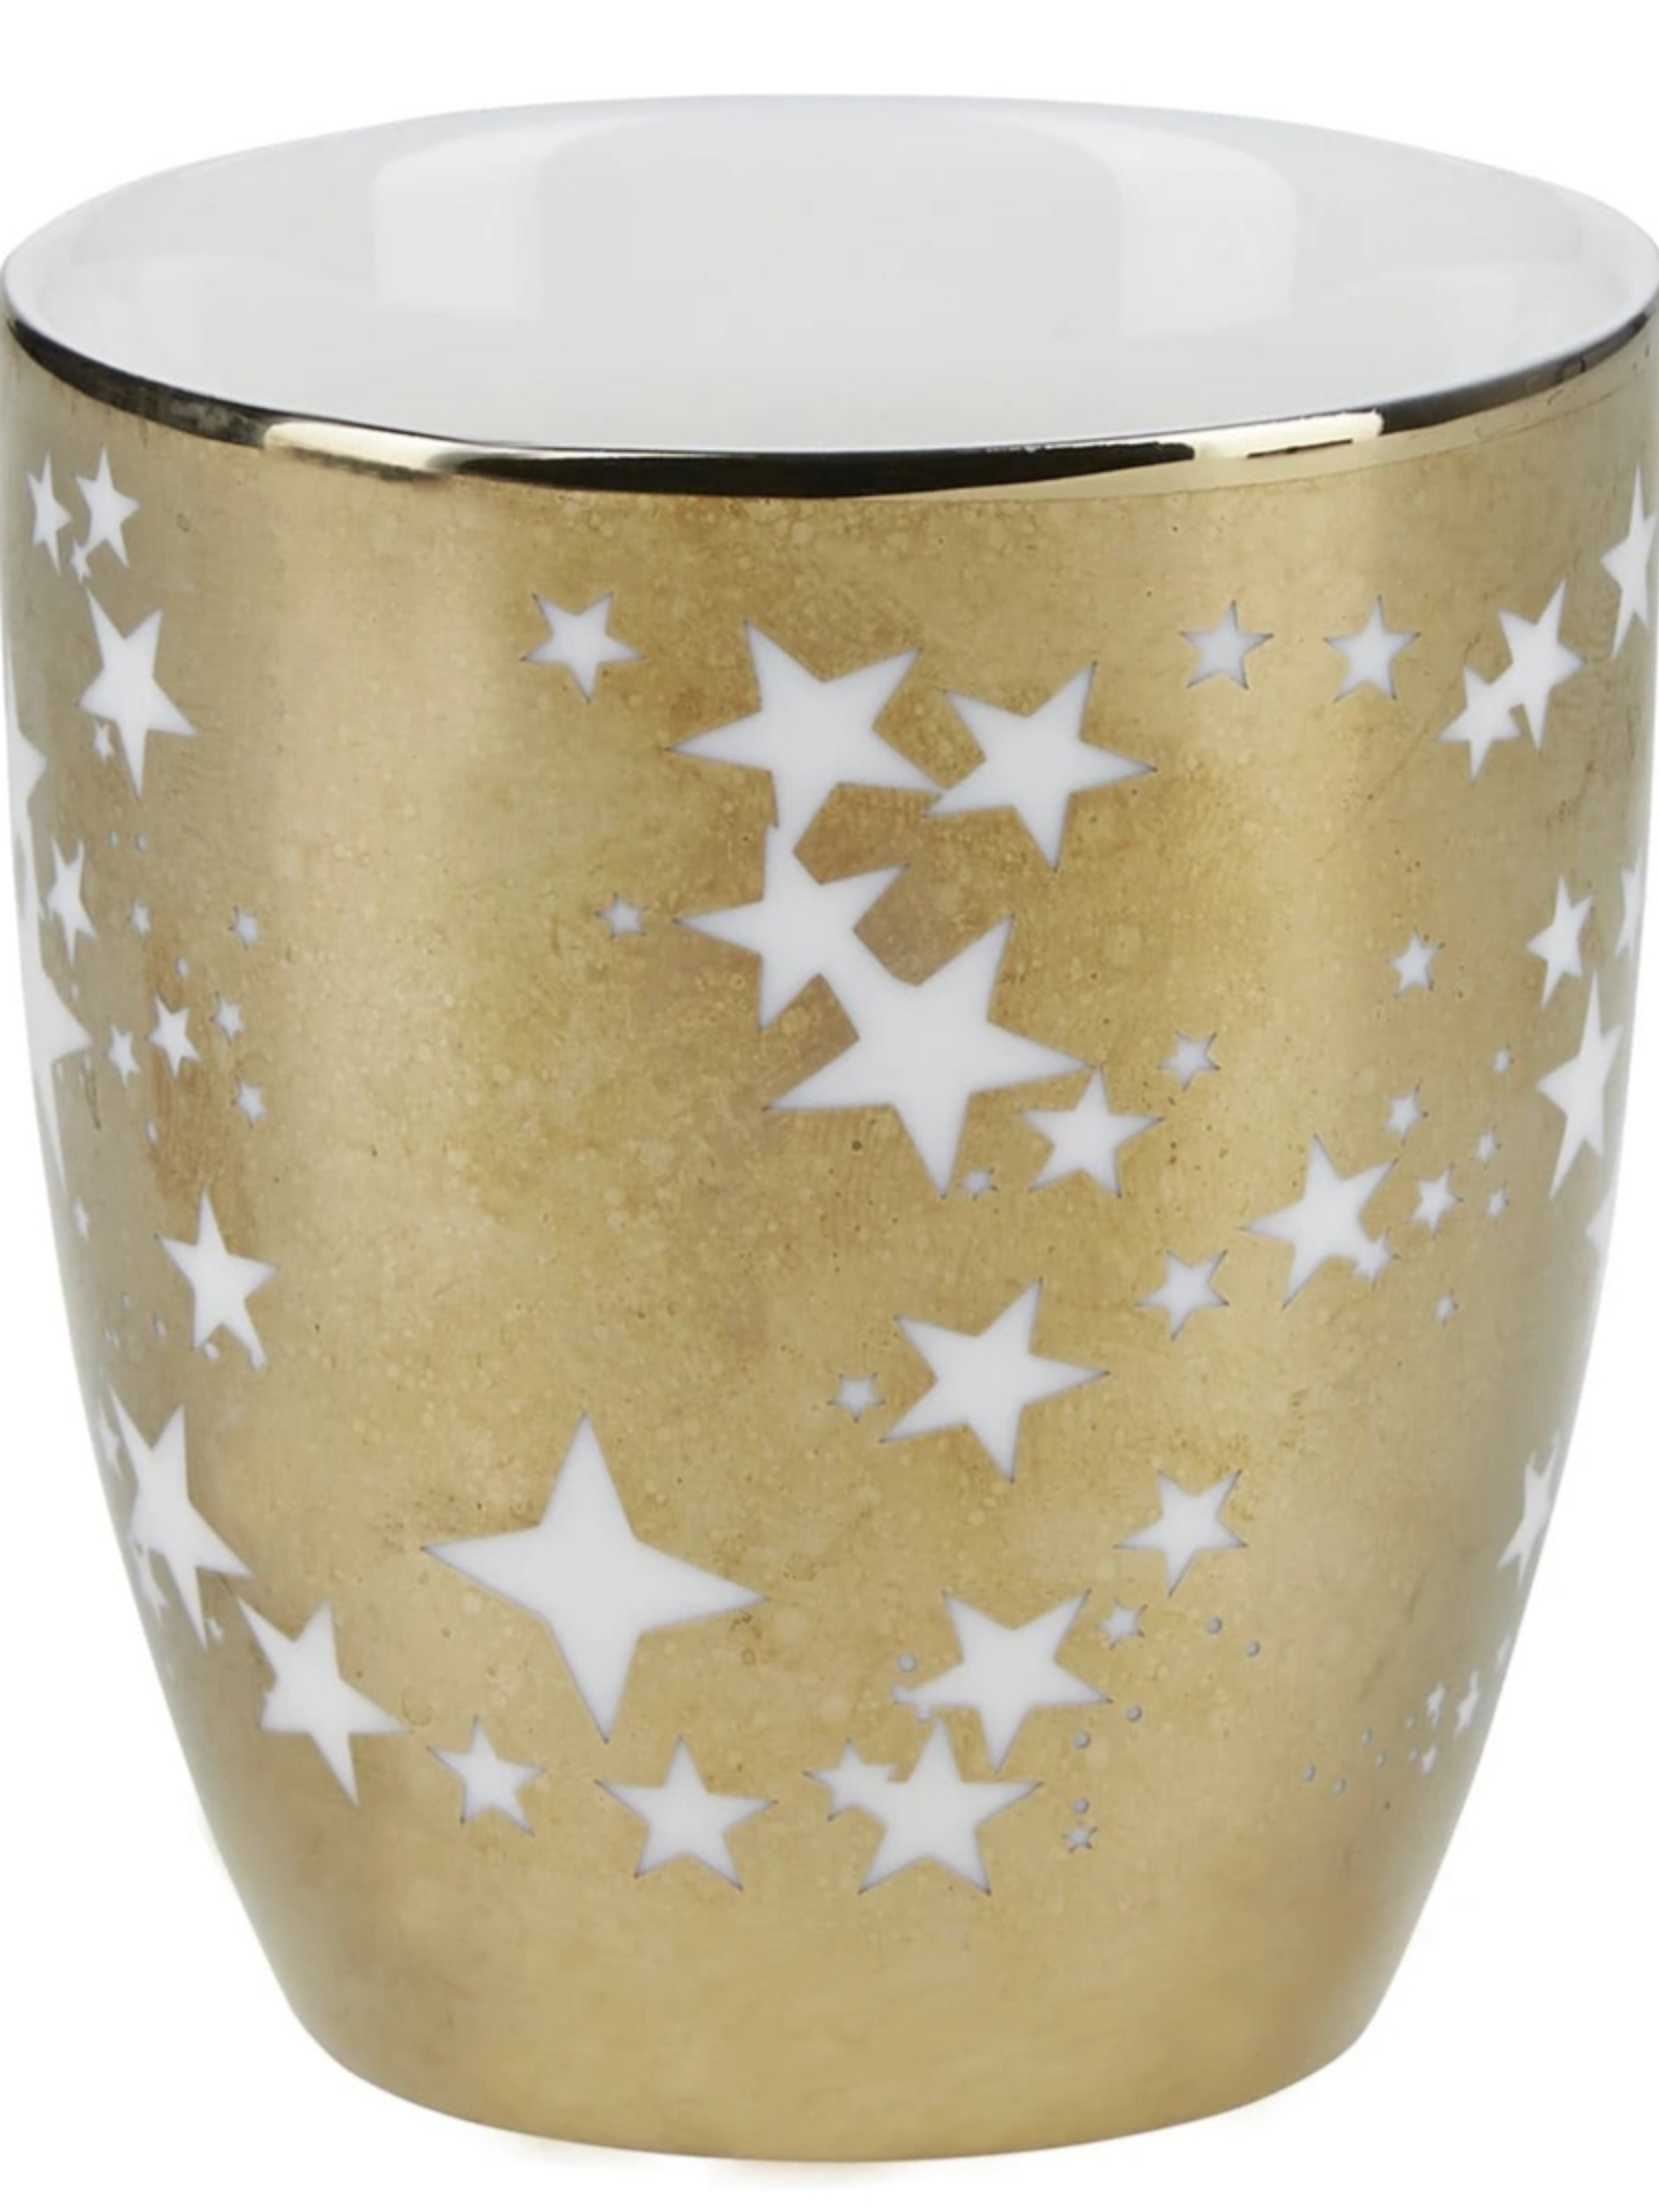 Miss Etoile Star Design Tealight Candle Holder in Antique Speckled Gold